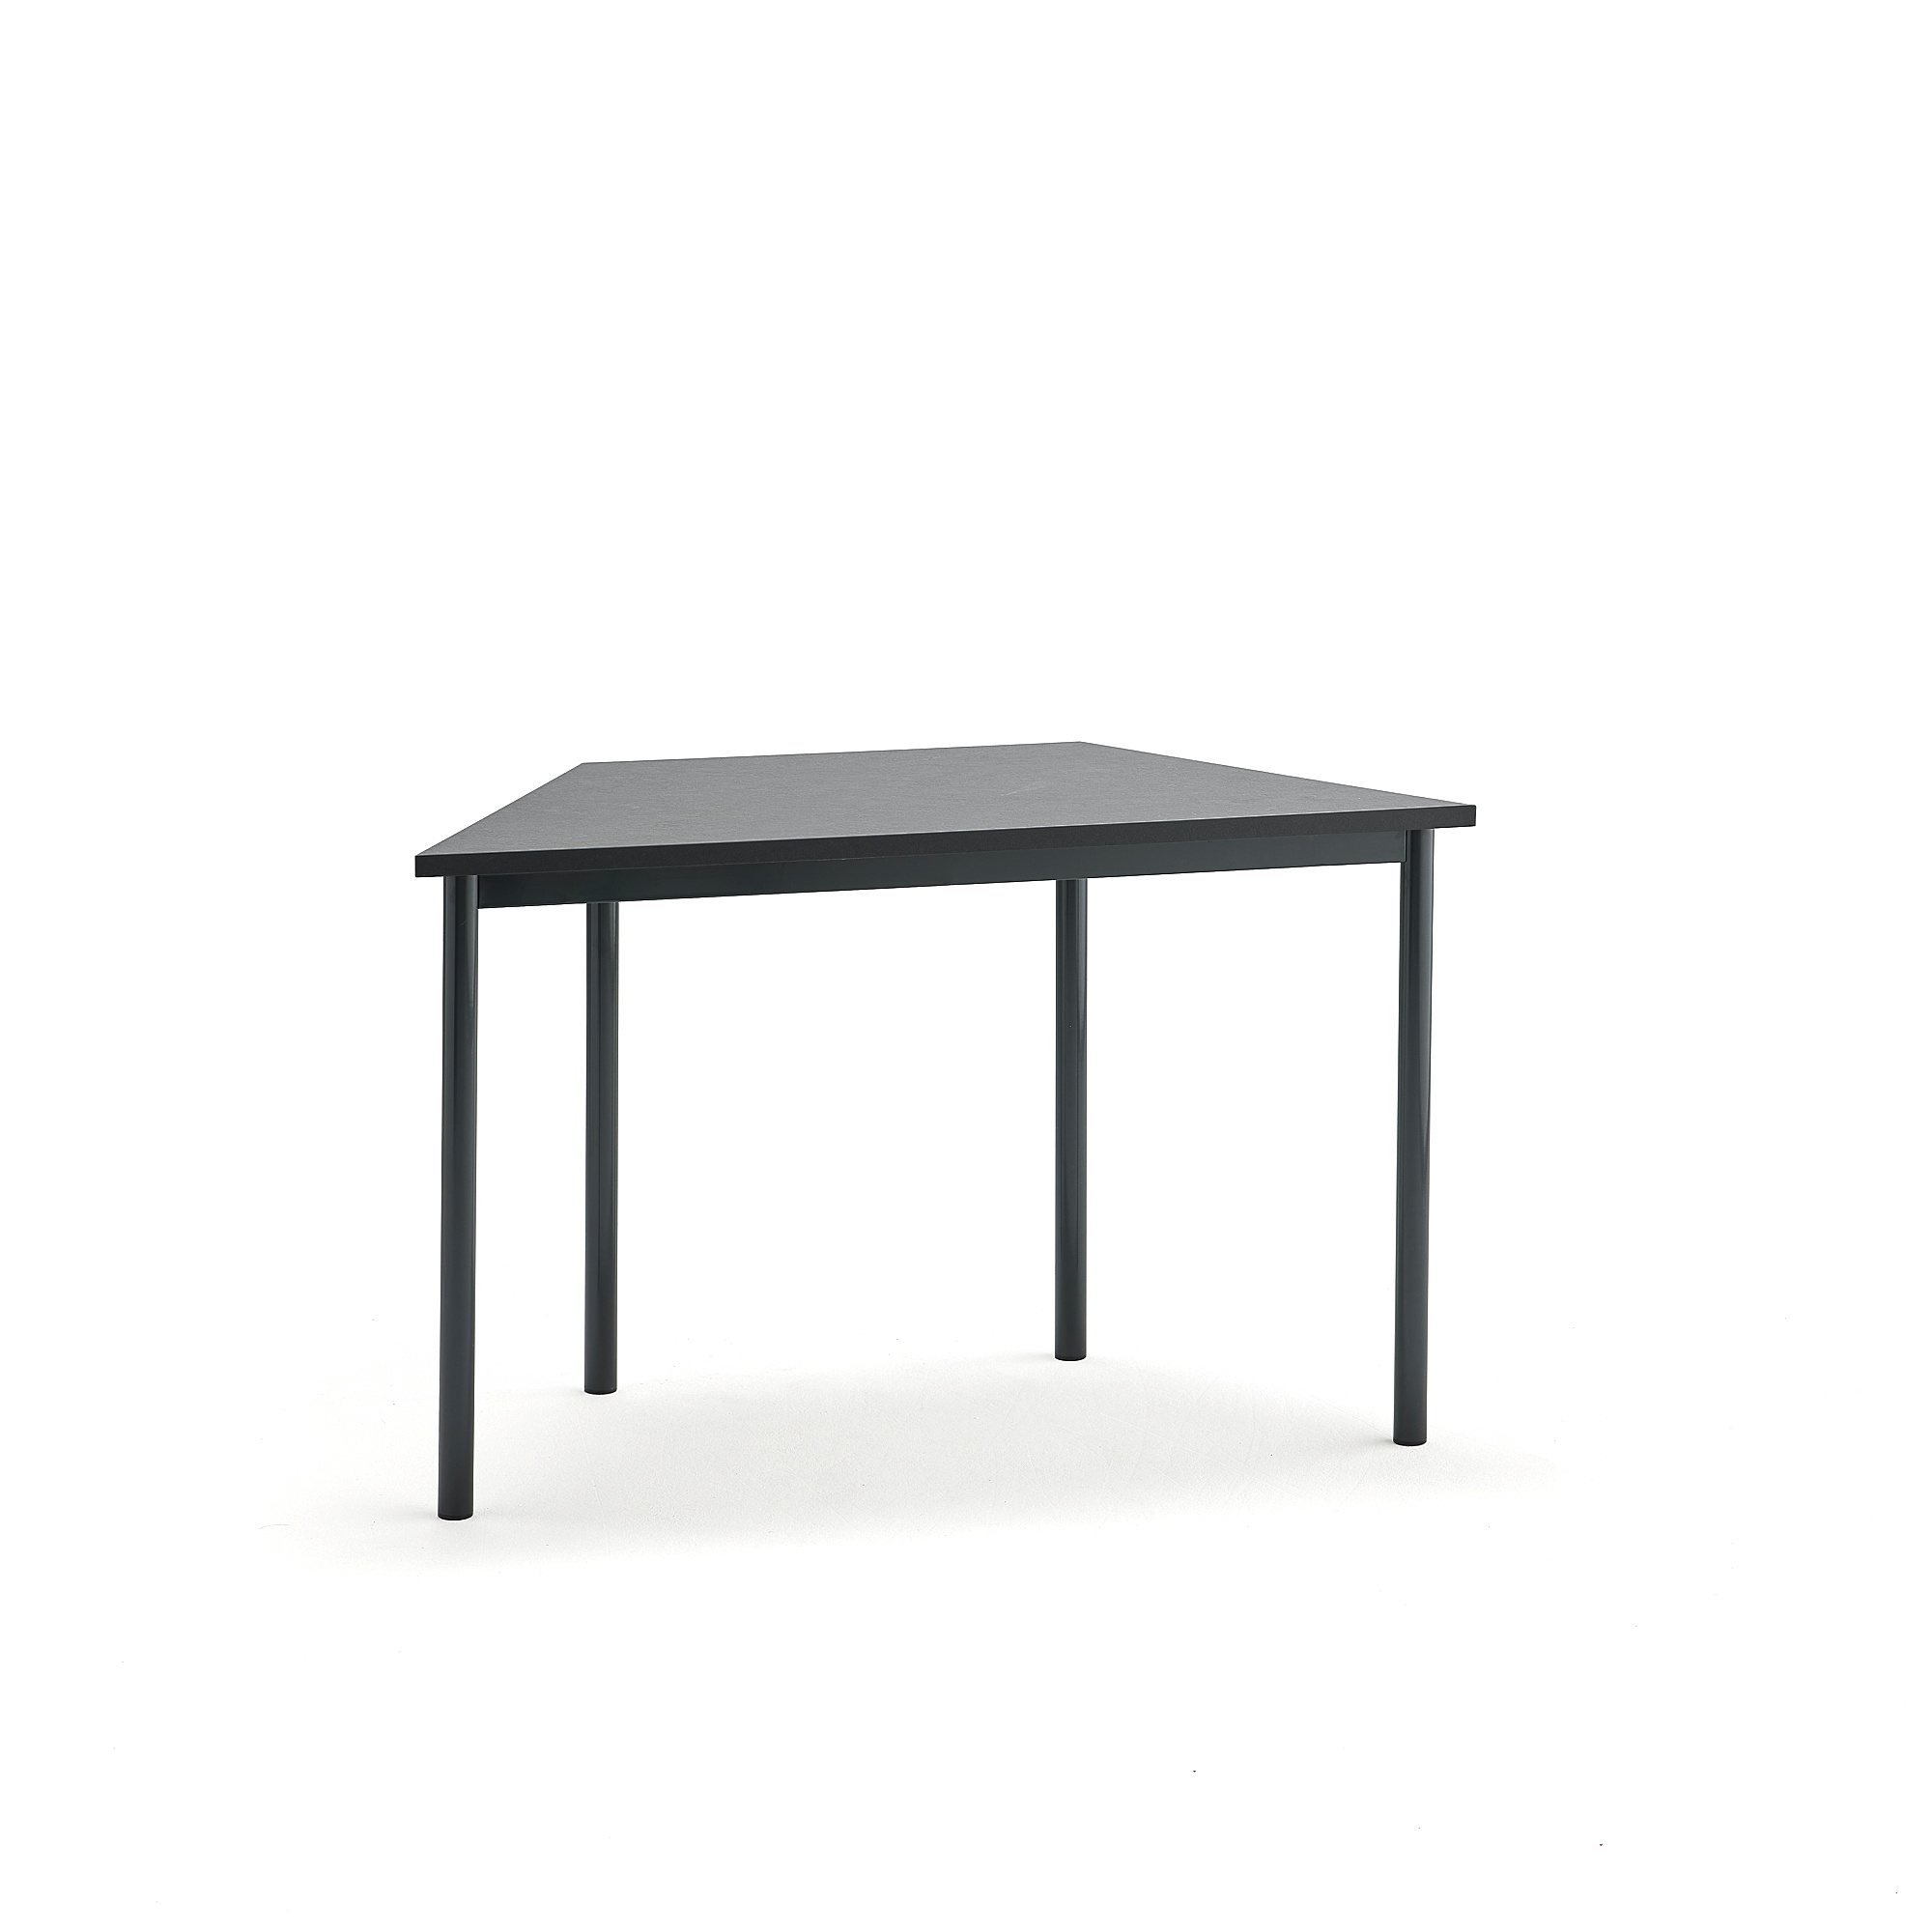 Stůl SONITUS TRAPETS, 1200x600x720 mm, antracitově šedé nohy, deska s linoleem, tmavě šedá